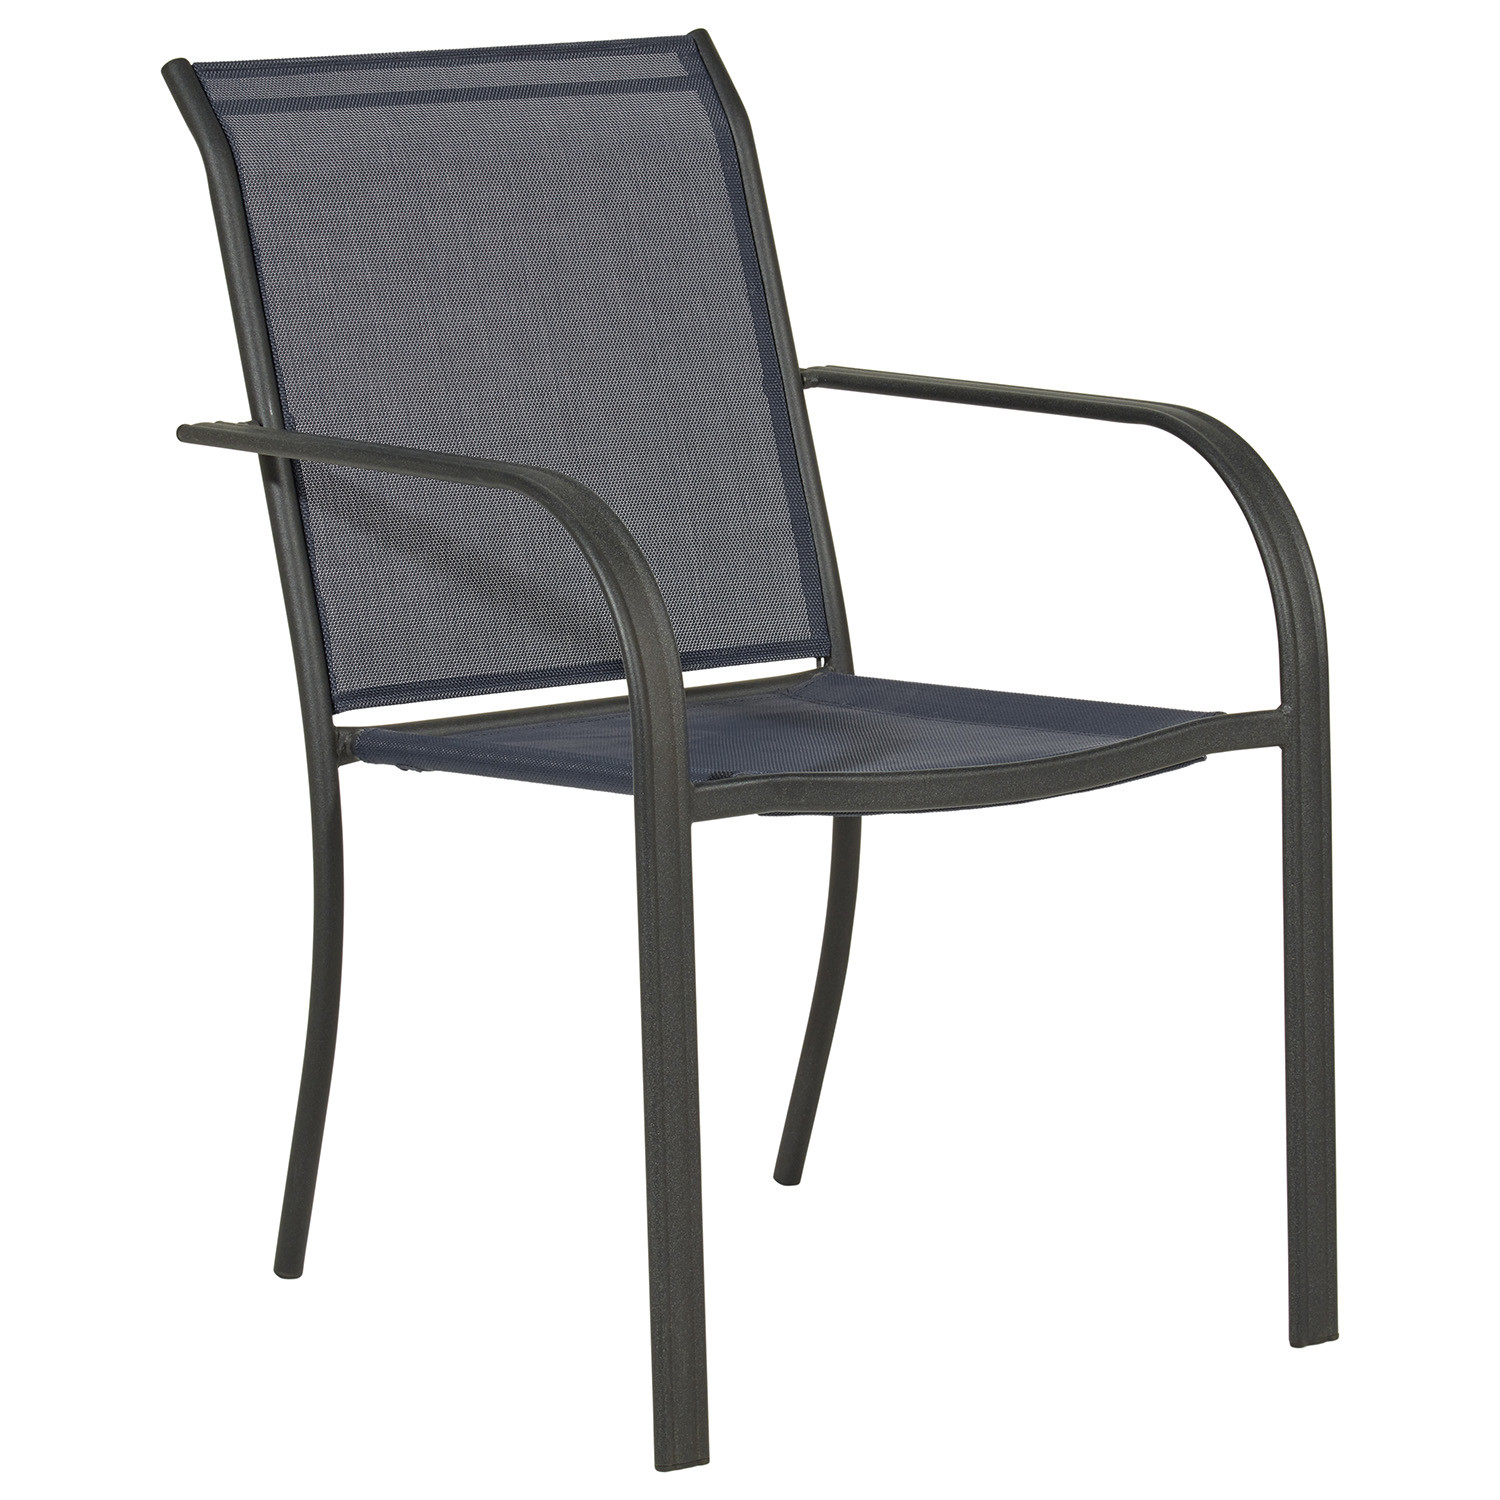 Malay Outdoor Essentials Rio Navy Sling Garden Chair Image 2